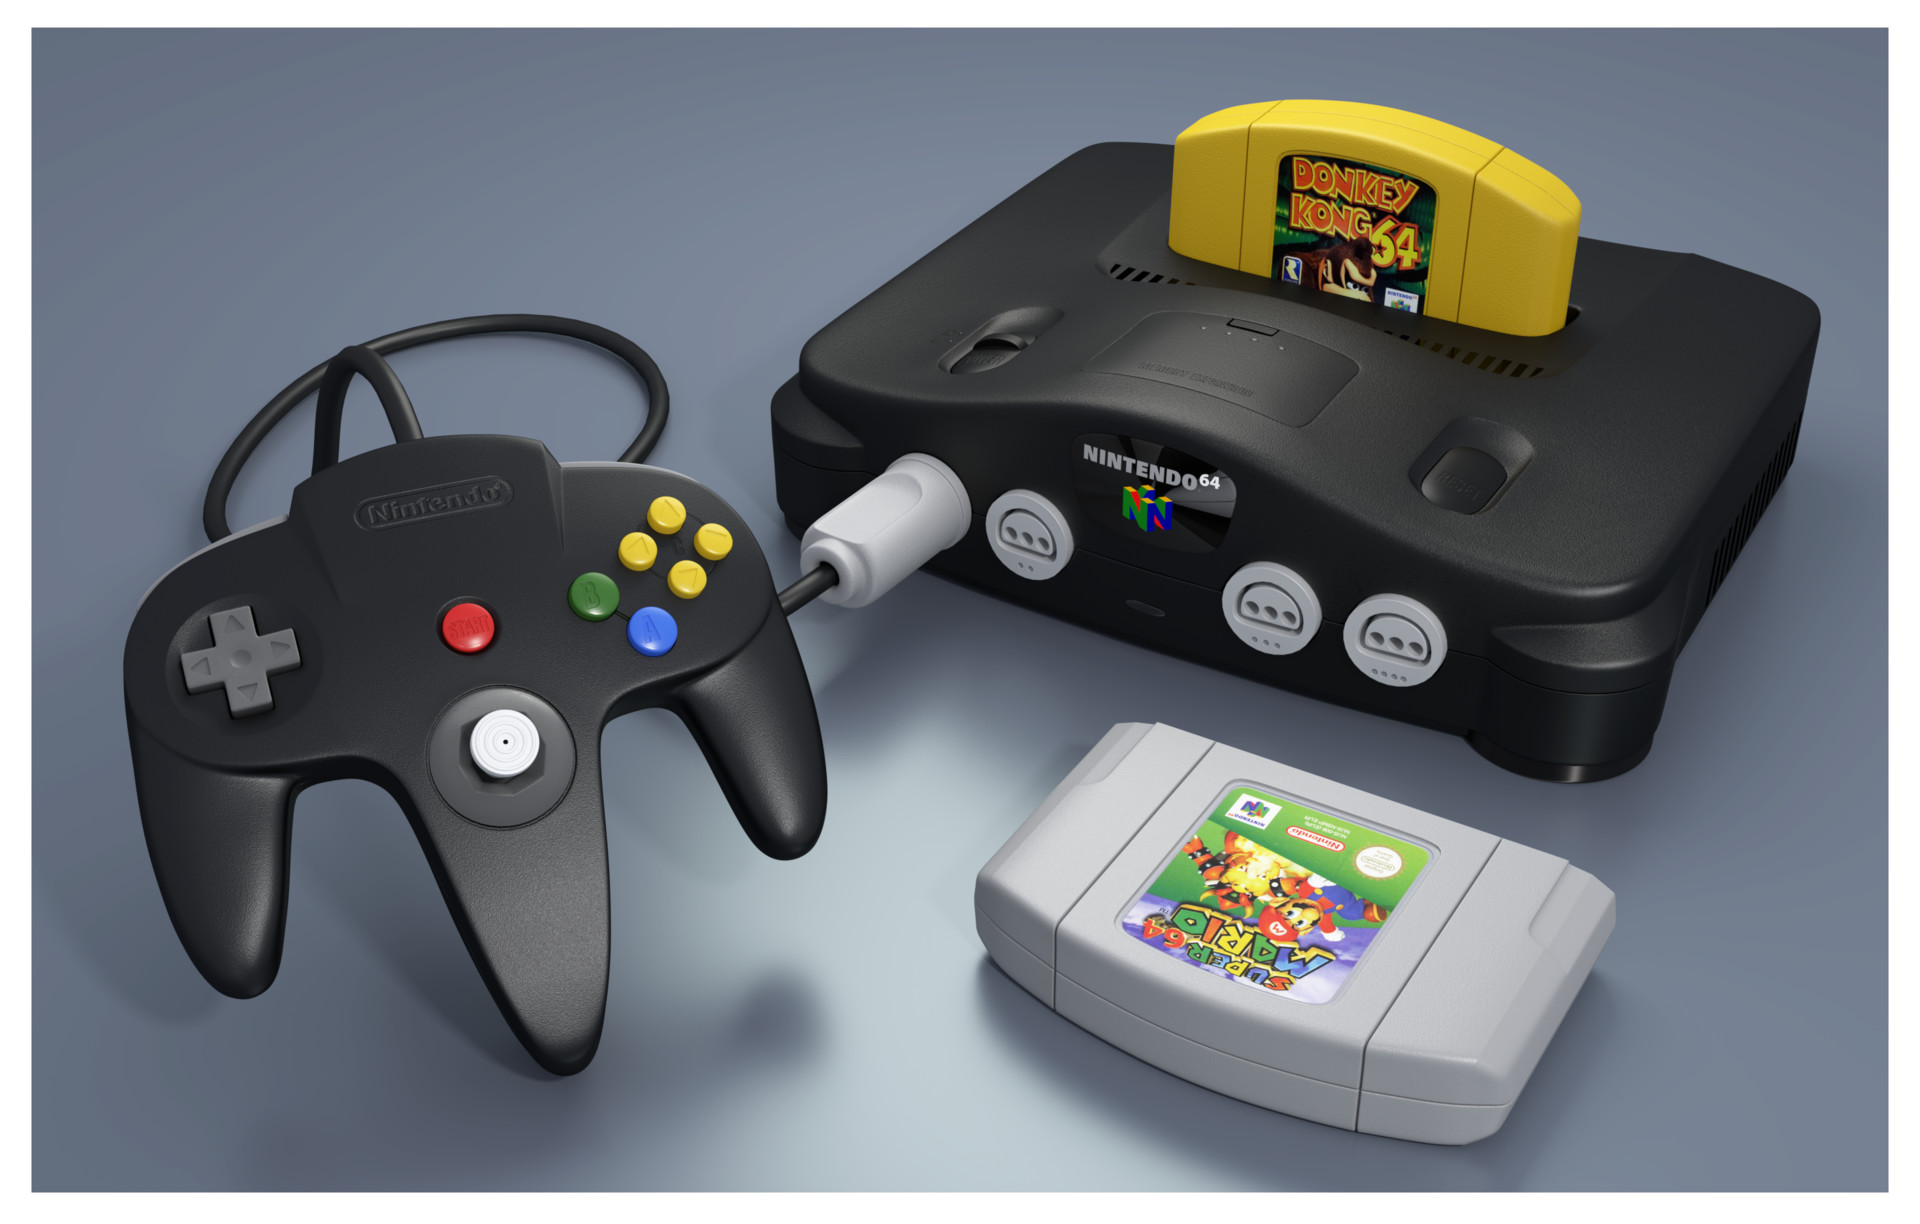 Нинтендо nintendo. Приставка Нинтендо 64 бит. Nintendo 64 приставка. Консоль Нинтендо 64. Nintendo 64 Classic Mini.